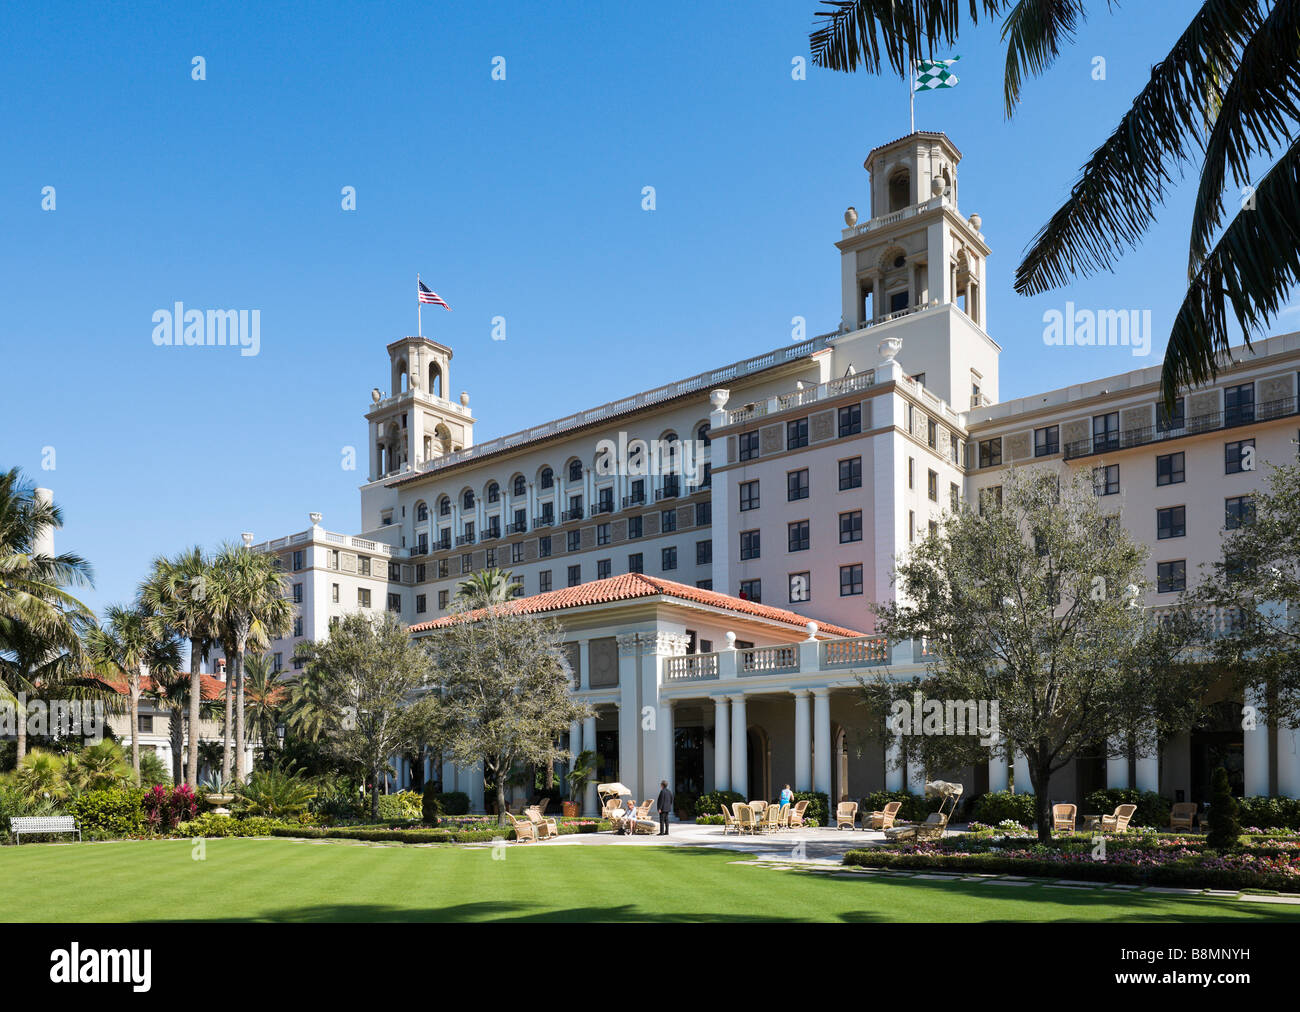 El famoso Breakers Hotel en Palm Beach, Gold Coast, Florida, EE.UU. Foto de stock